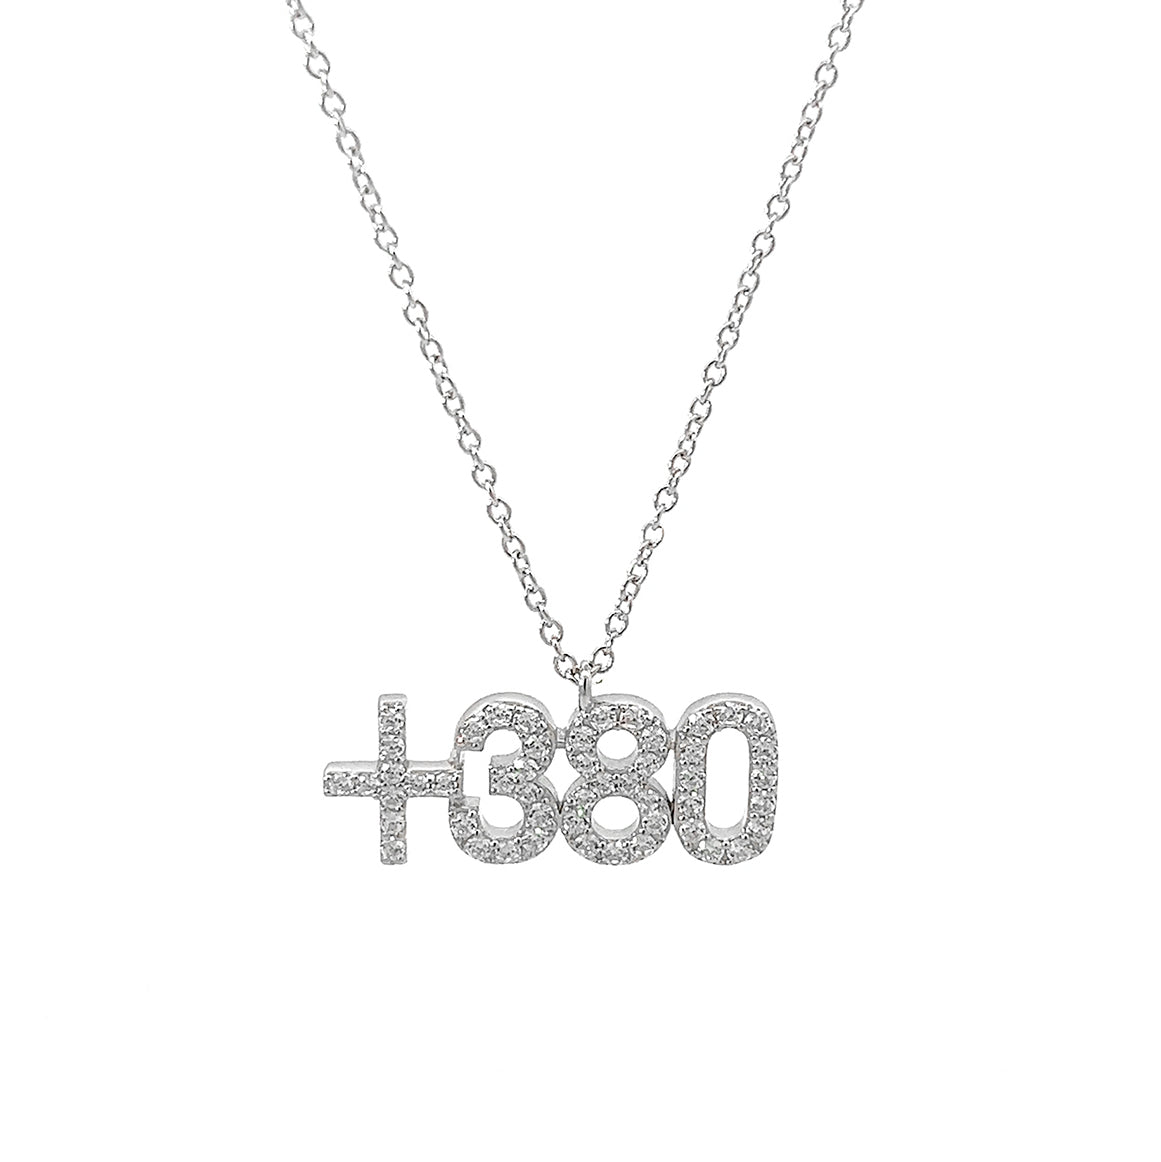 +380 Ukrainian Necklace Zirconia by Natkina